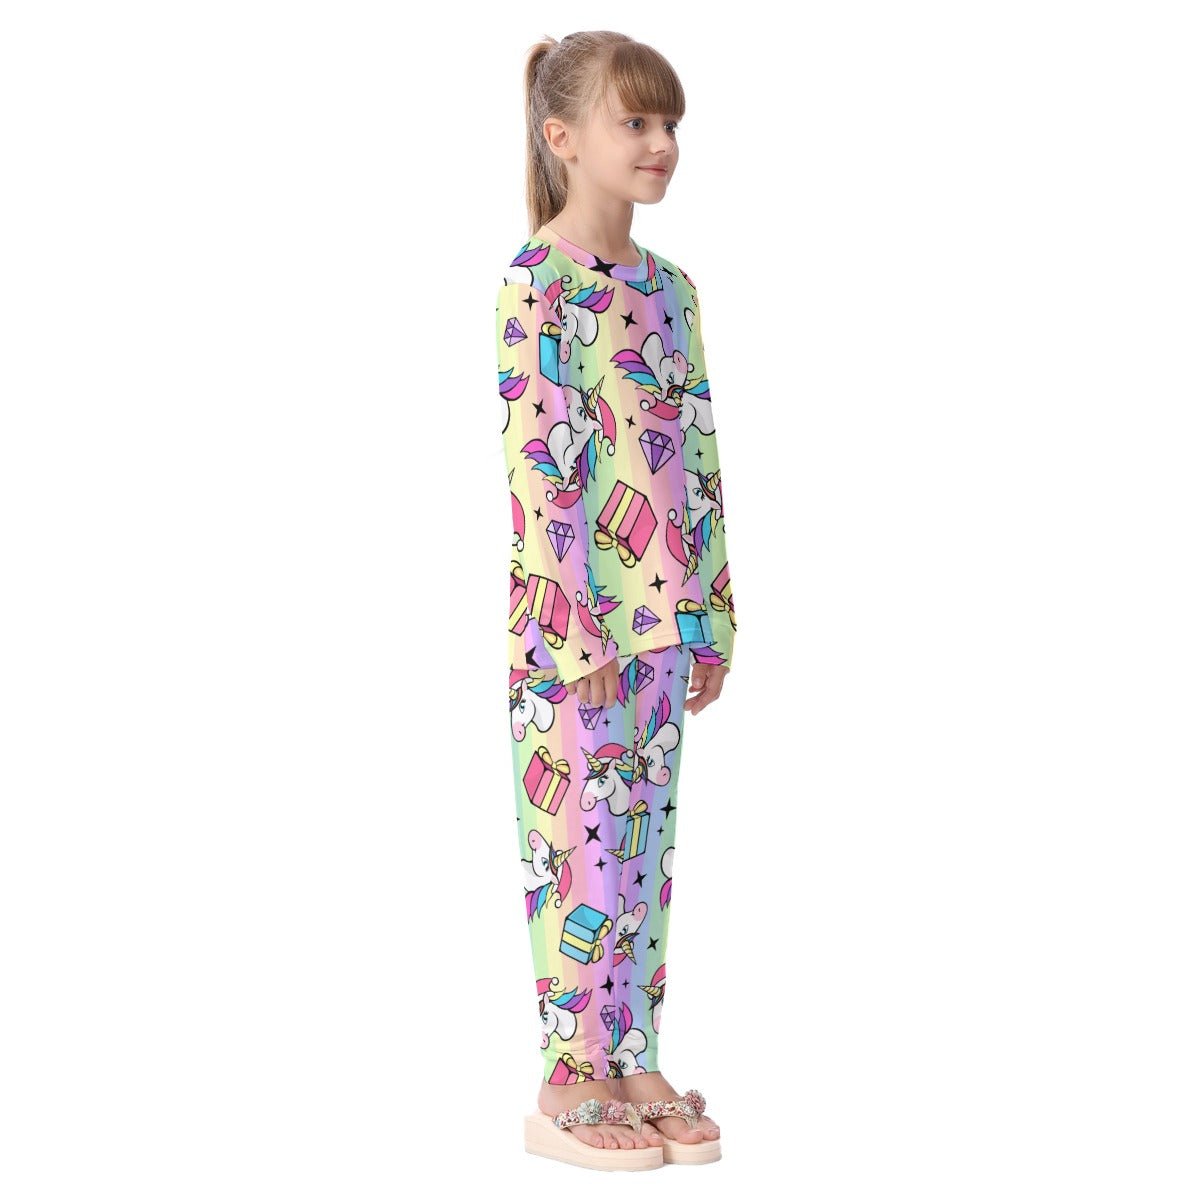 Kids Christmas Unicorn Pyjama Set - Rainbow - Festive Style